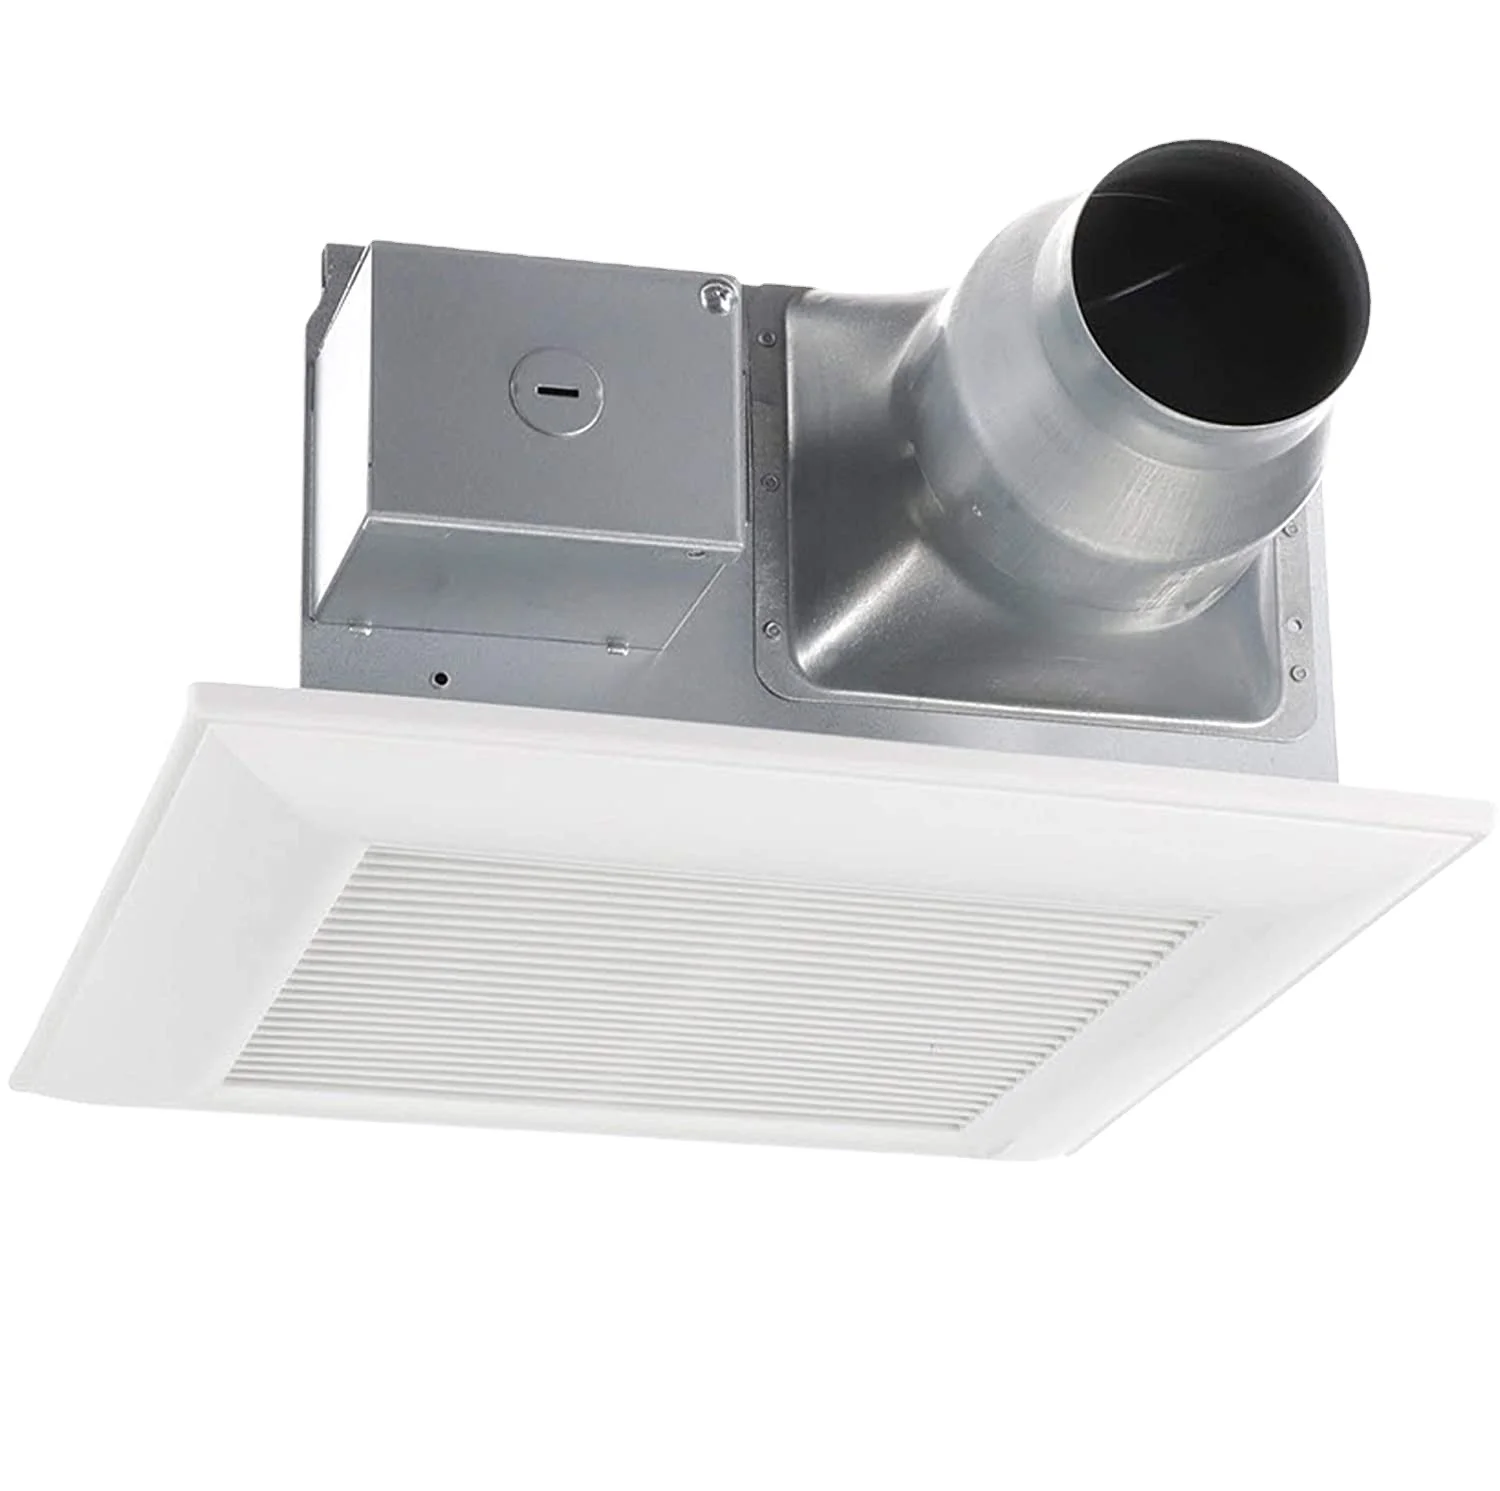 FV-0811VF5 full metal case ceiling duct pipe tubular window mount bathroom ventilation exhaust fan 80 or 110 CFM